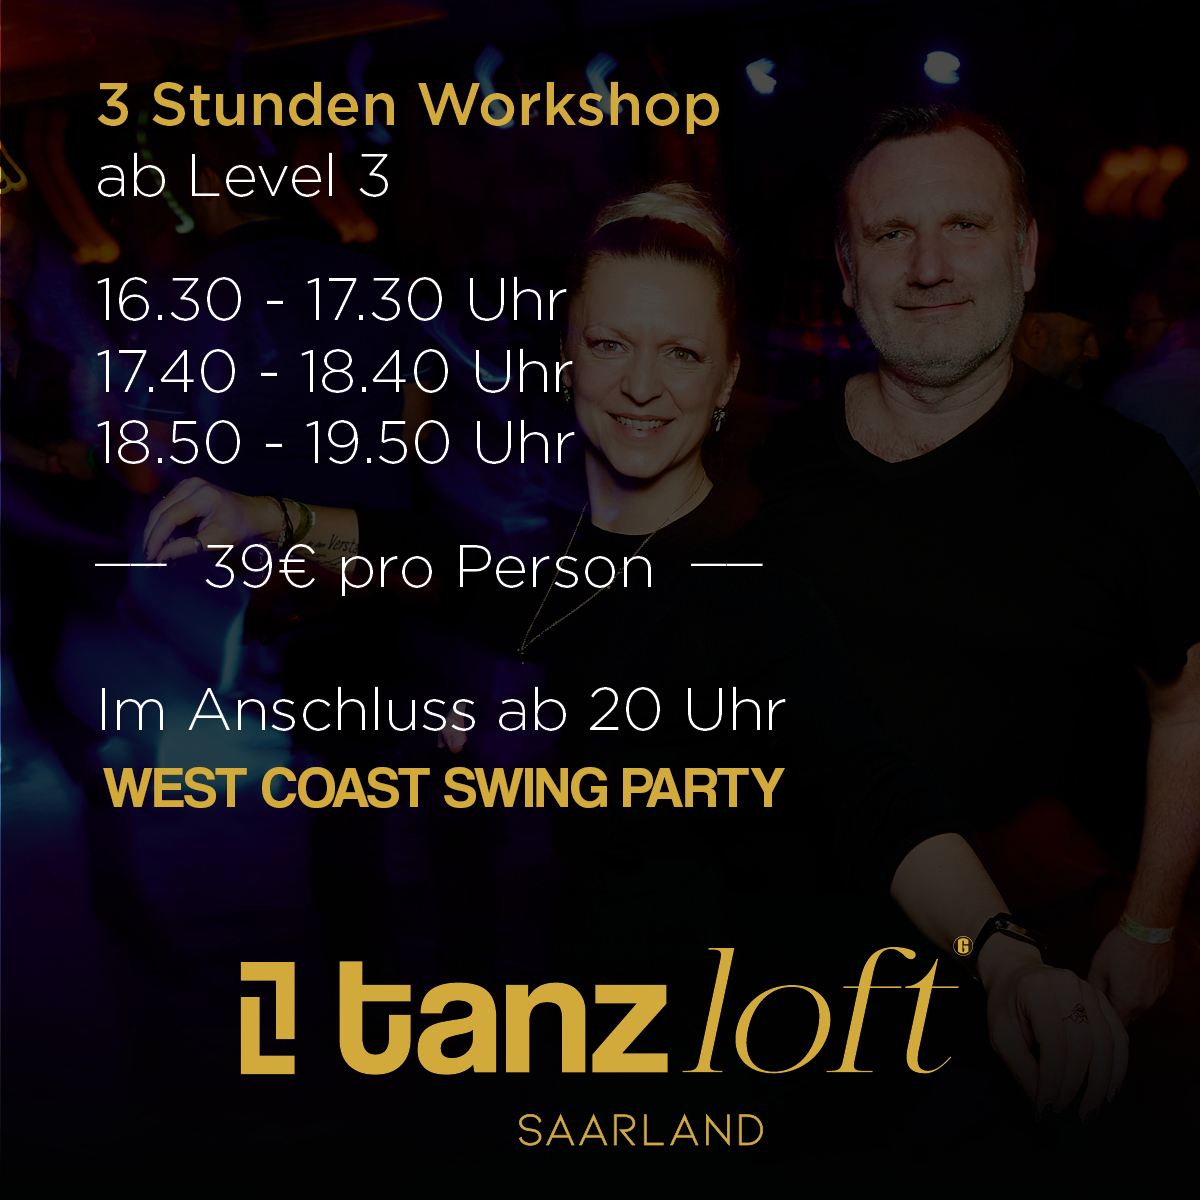 2022 08 tanzloft saarland wcs workshops marcheldt2